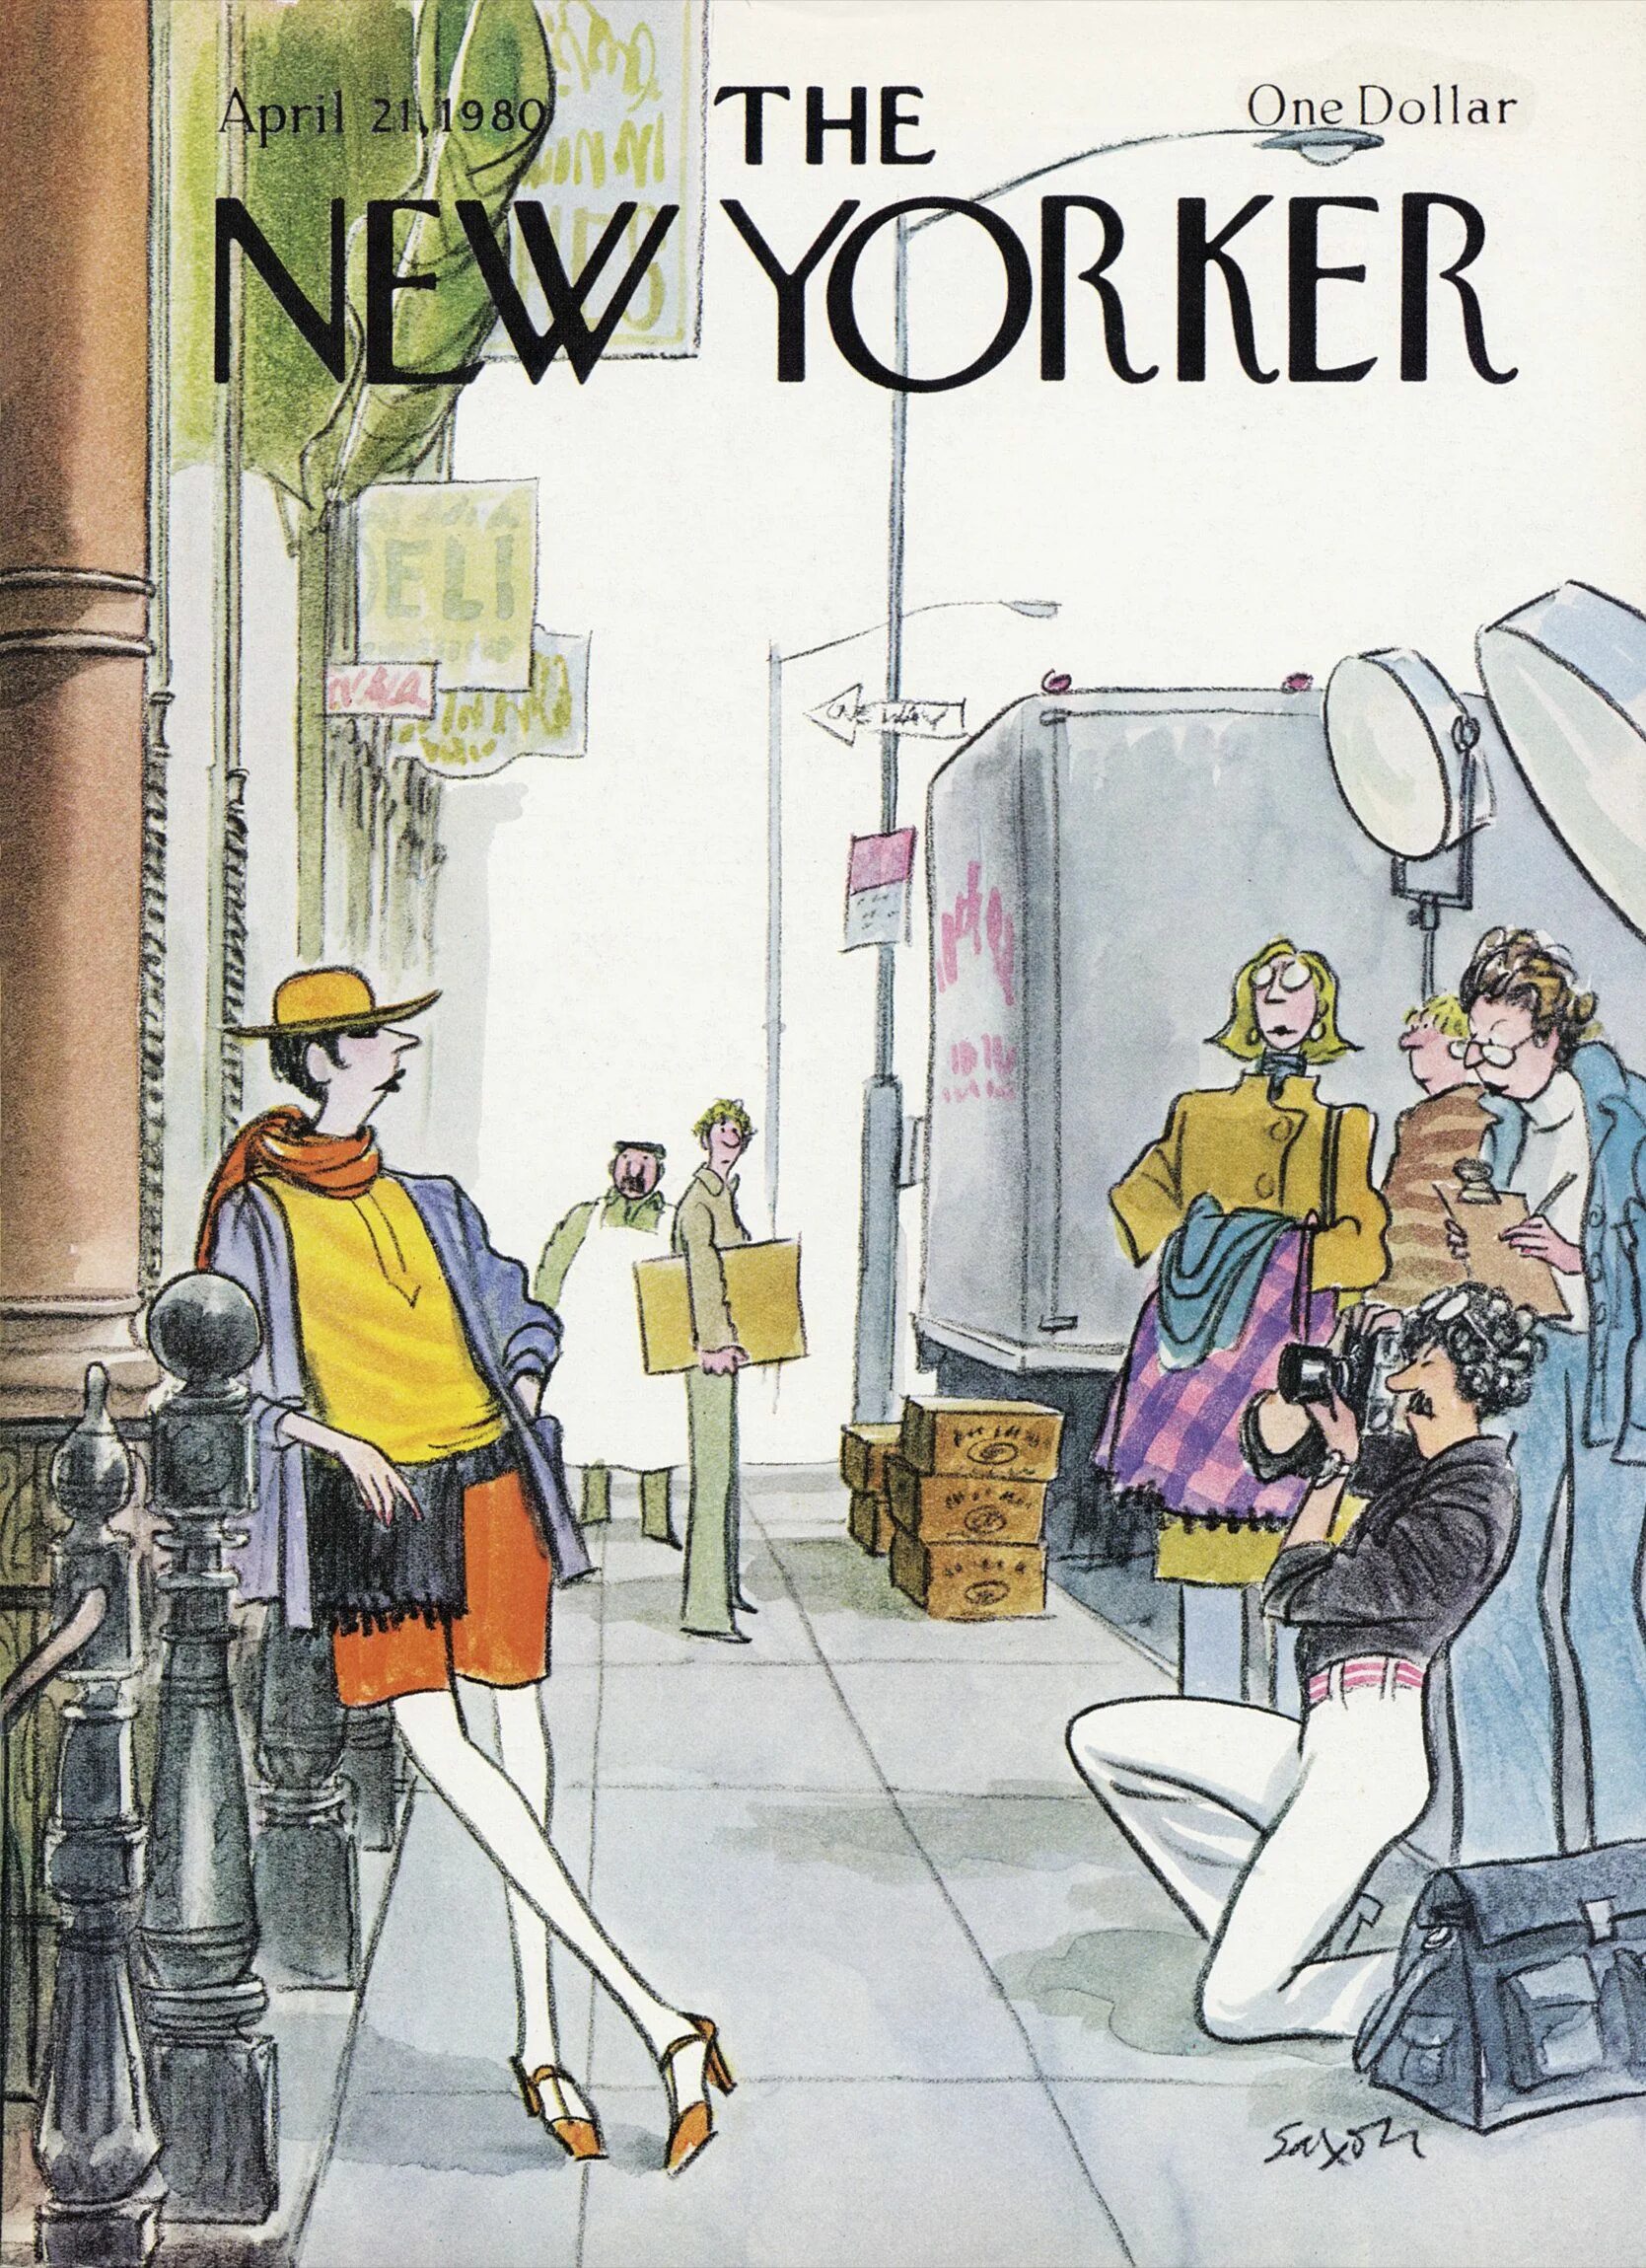 Журнал new yorker. Обложки журнал Нью-йоркер Нью-йоркер. The New Yorker Magazine обложки. Винтажные обложки New Yorker. The New Yorker 1980.